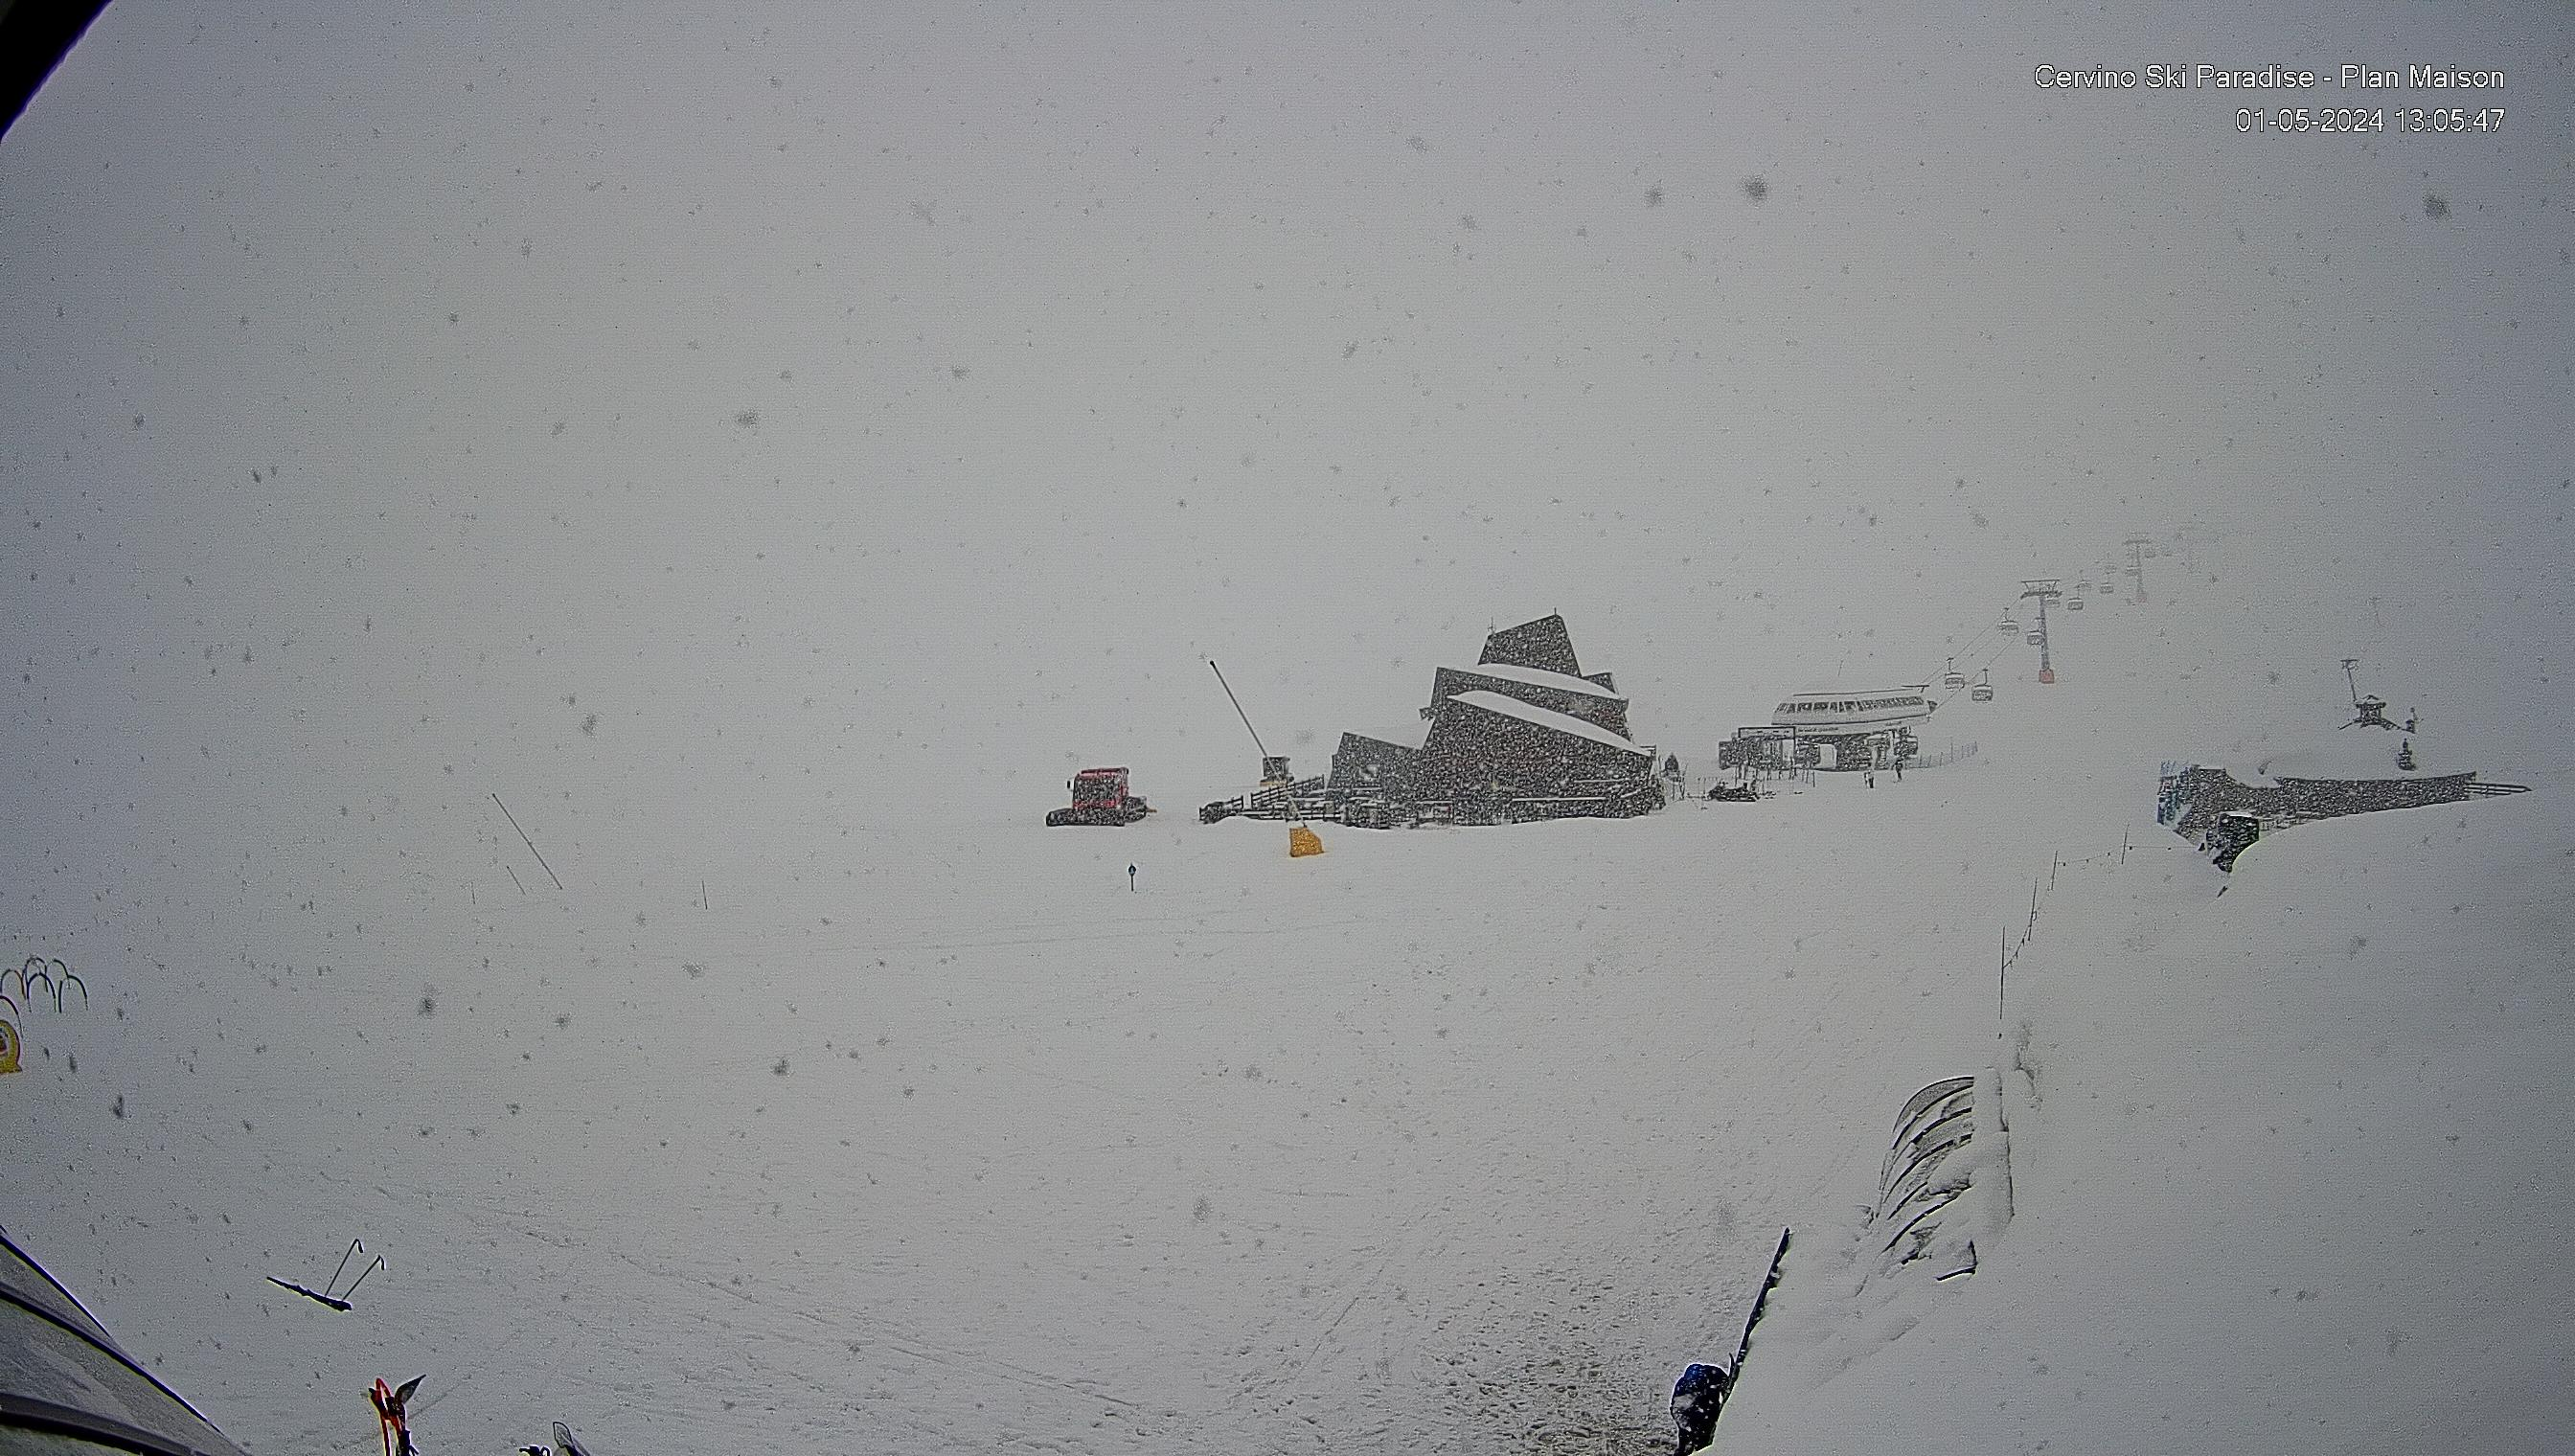 Cervinia webcam - Plan Maison ski station